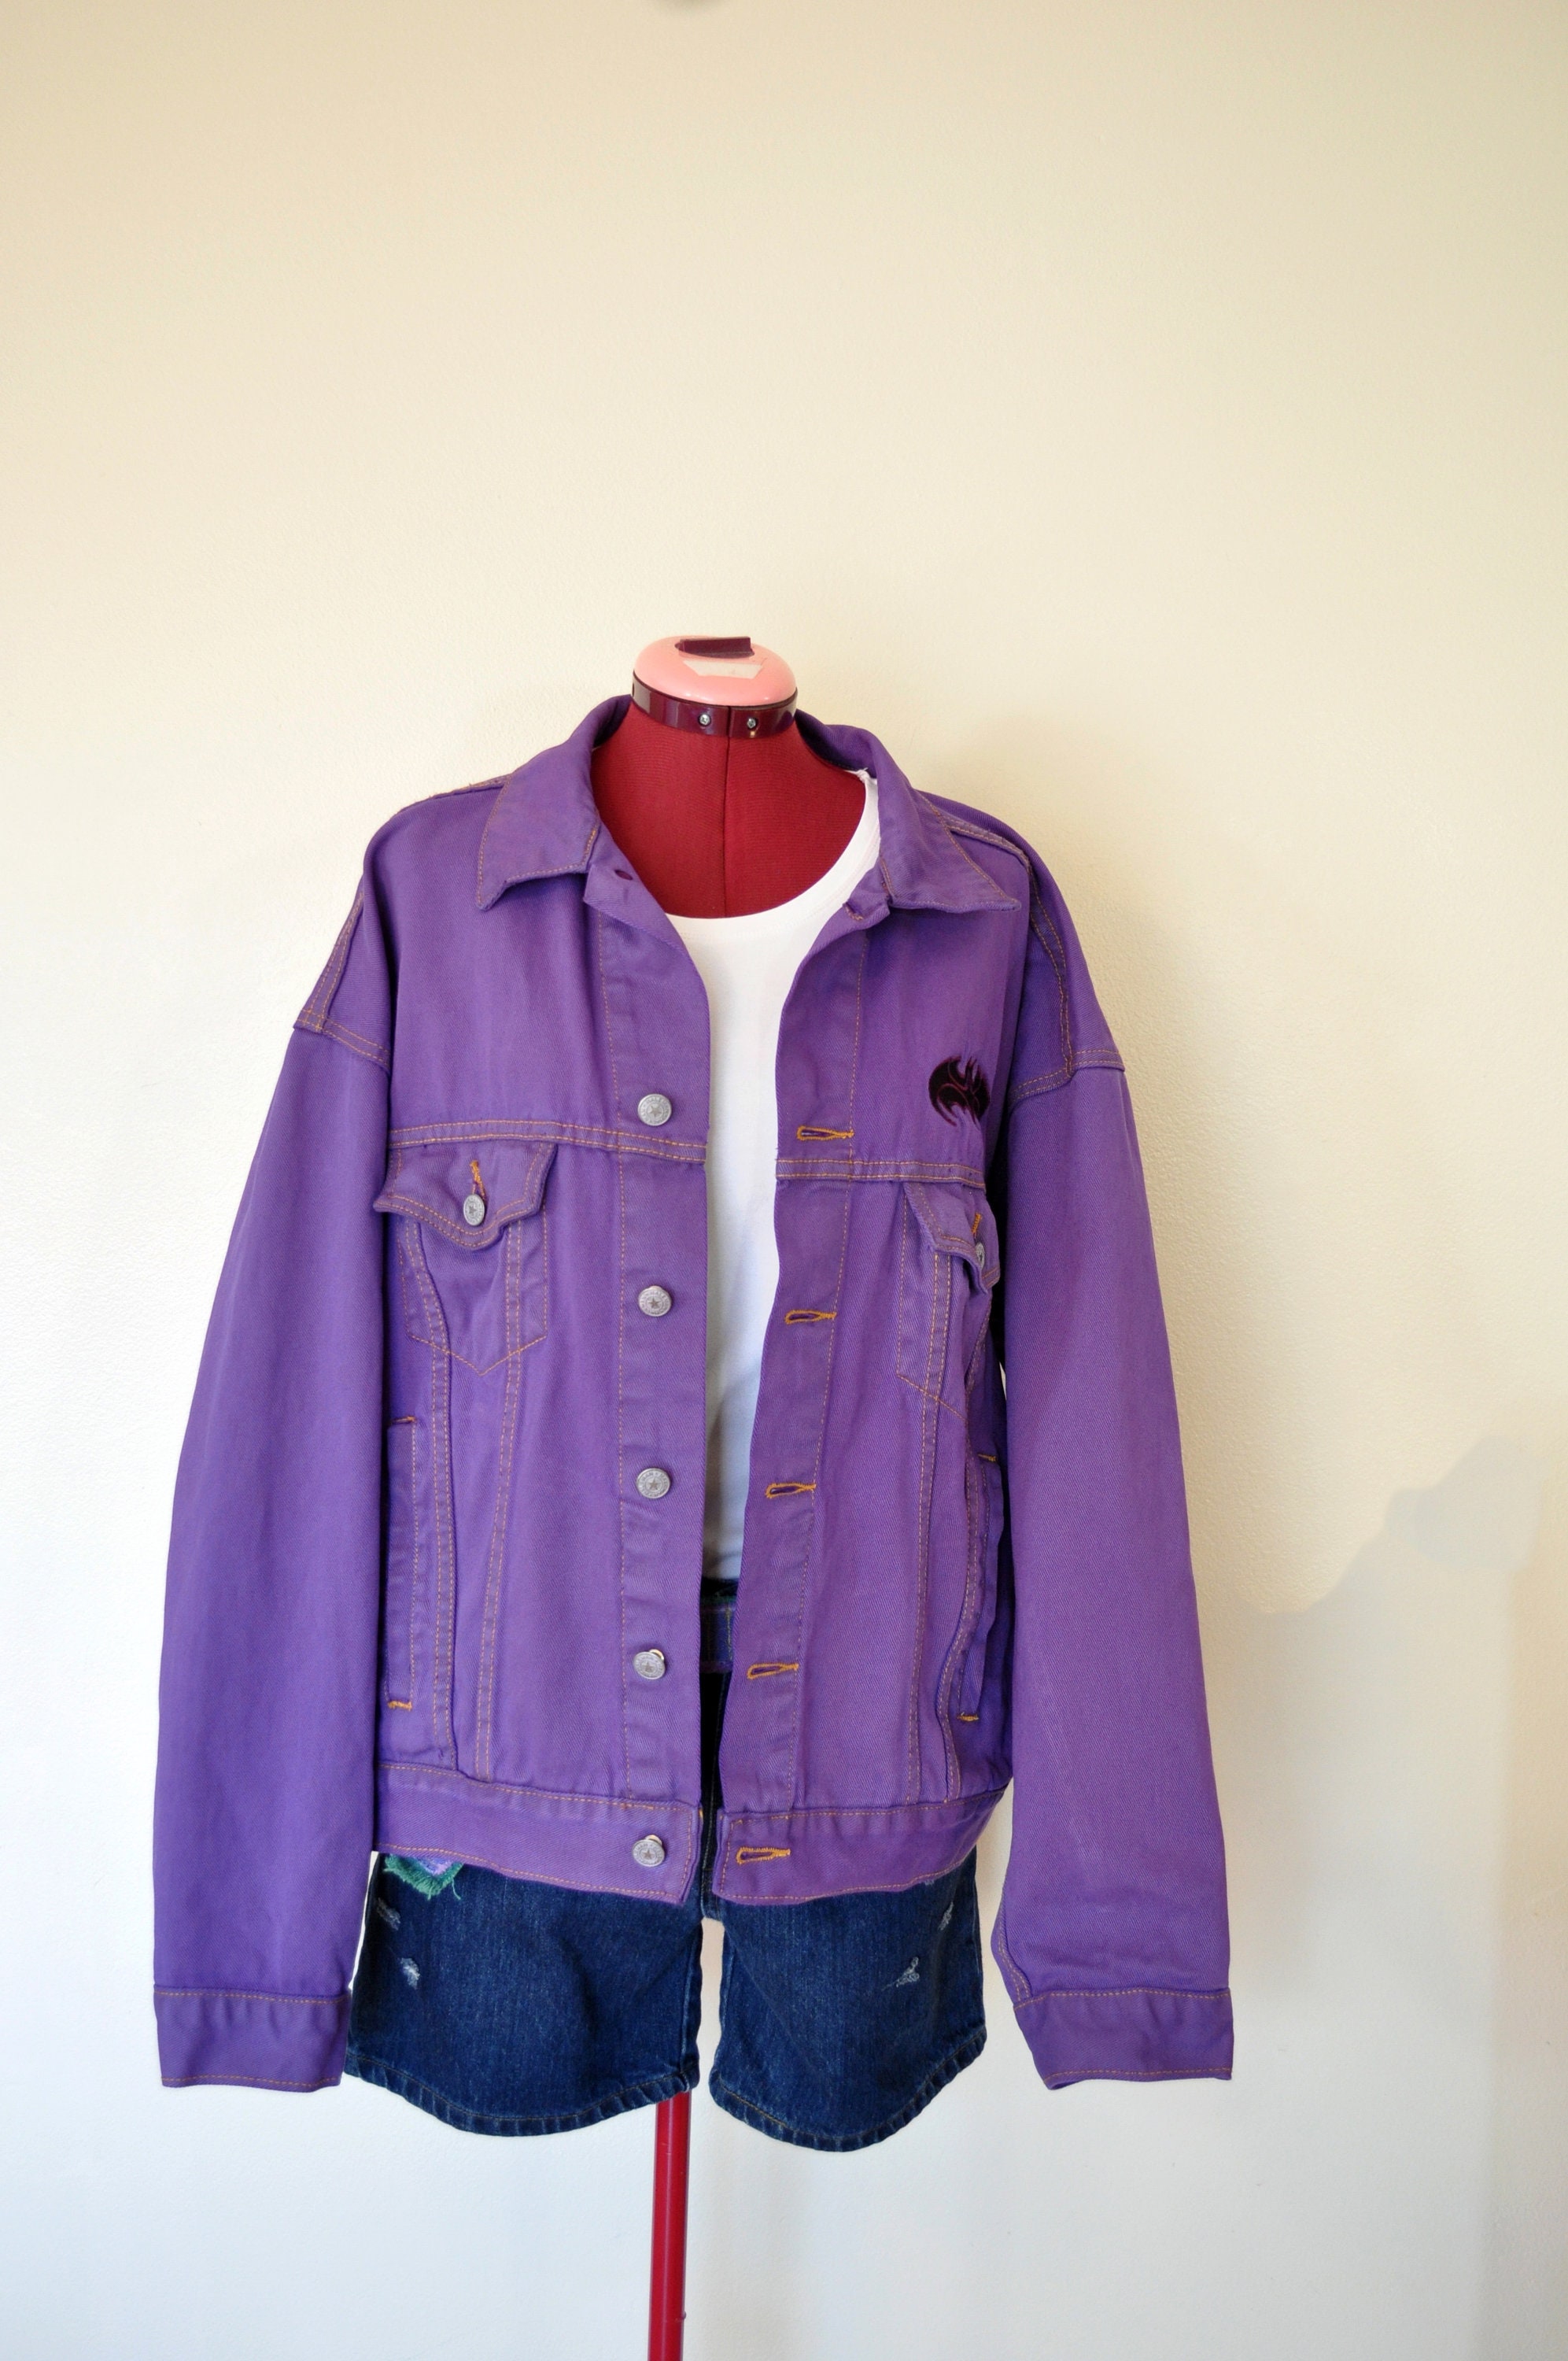 Purple Men's Embossed Faded Denim Jacket